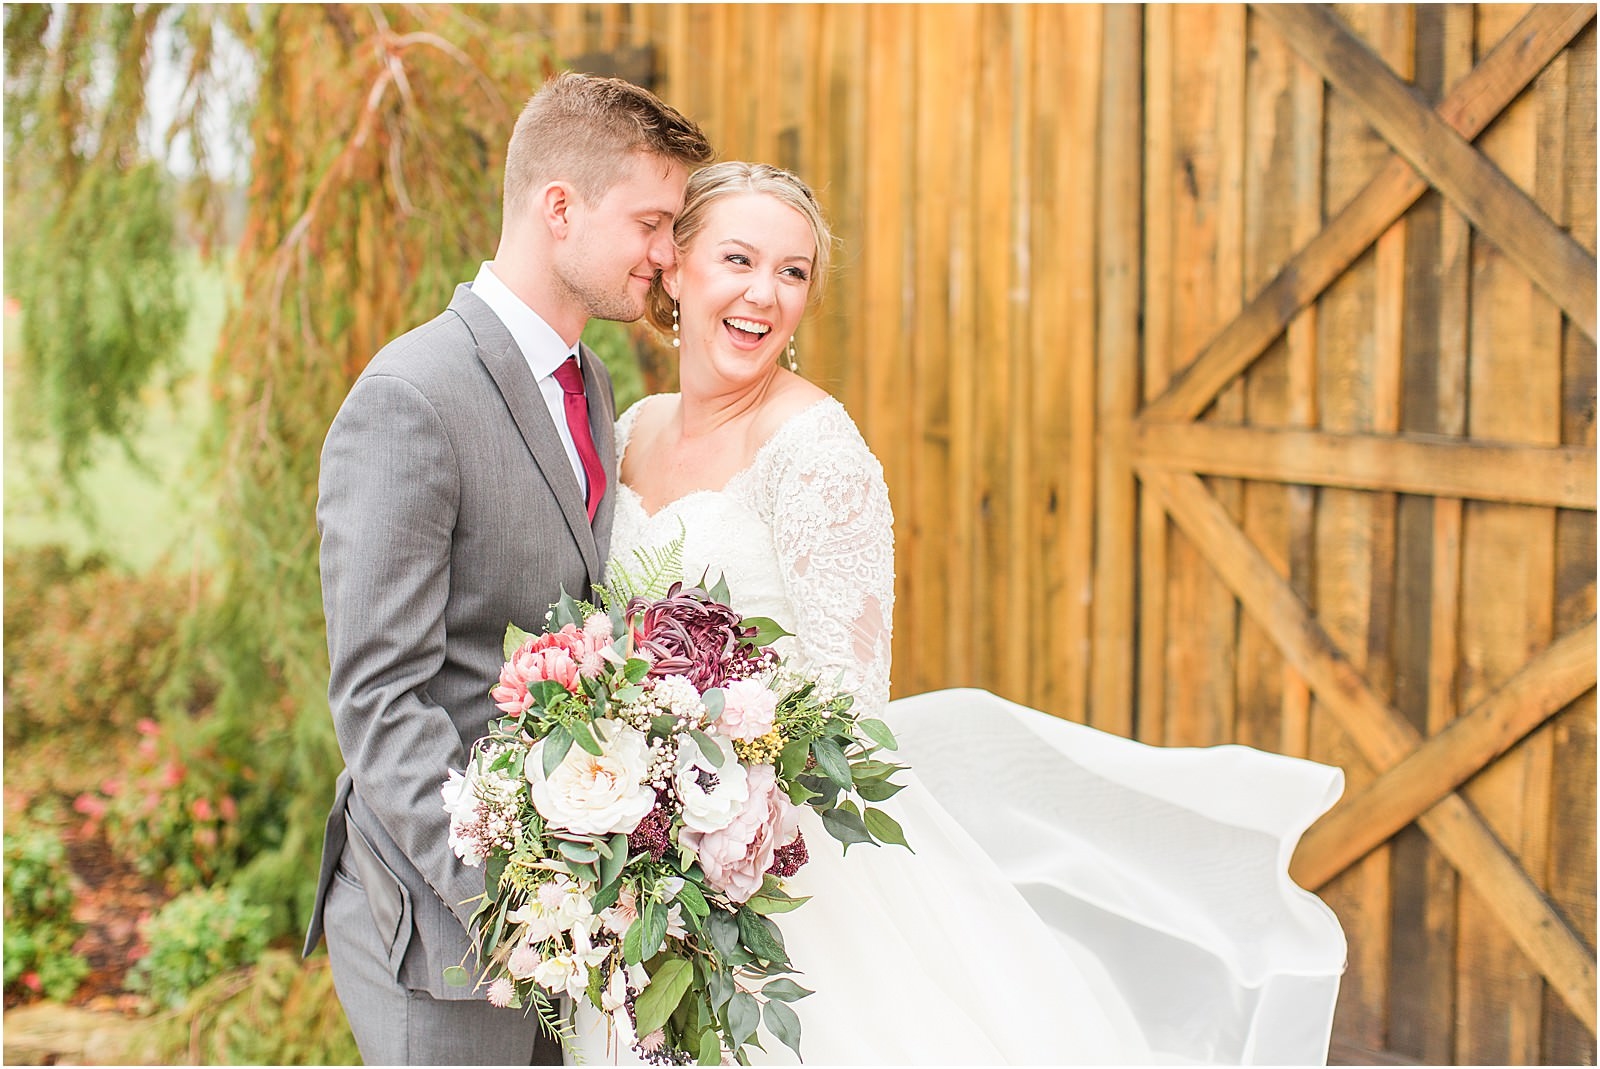 A Rainy Corner House Wedding | Rachel and Nick | Bret and Brandie Photography 0049.jpg